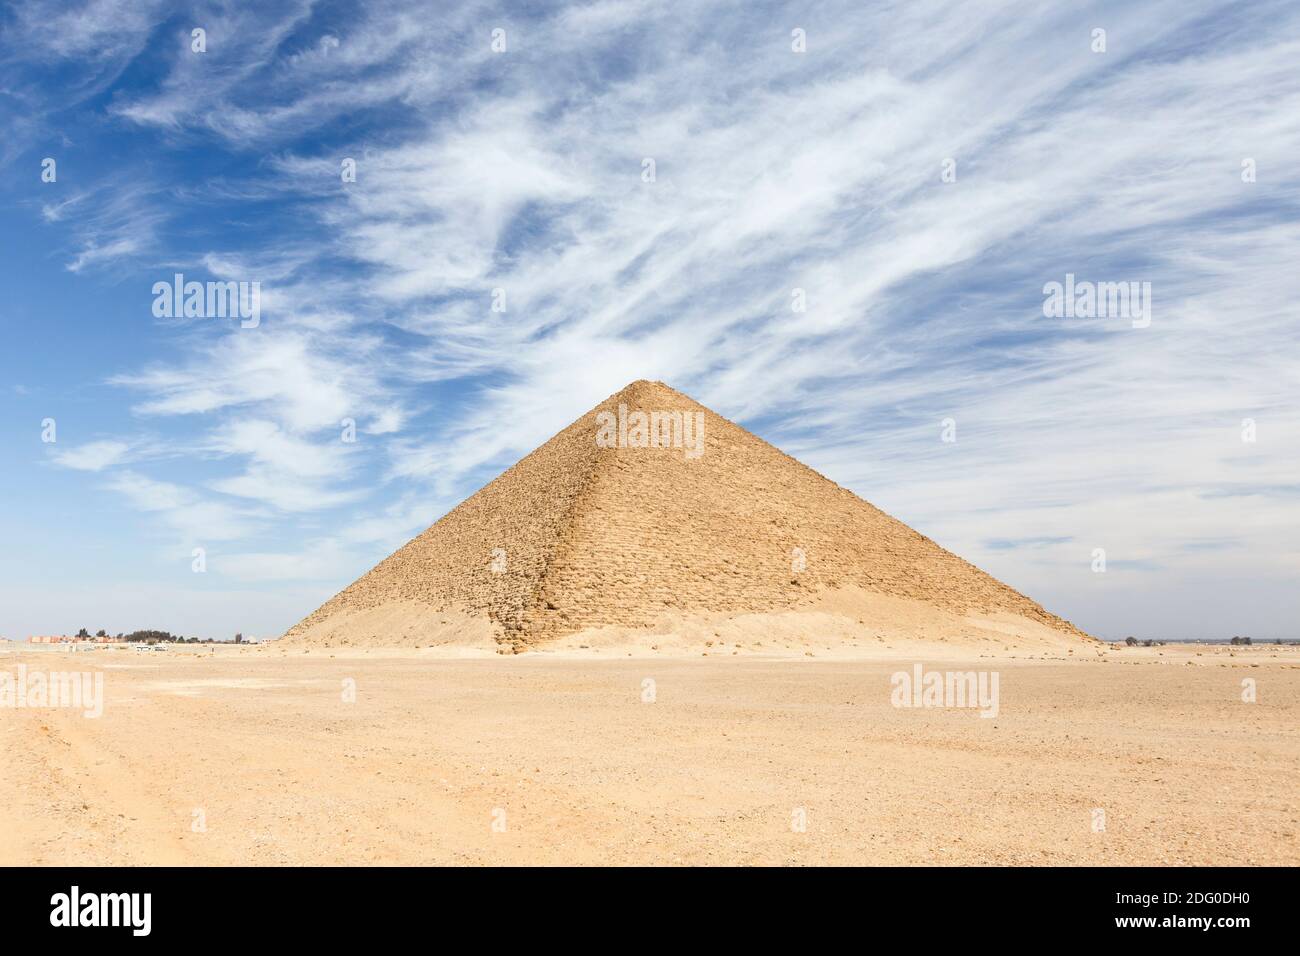 The red pyramid at Dahshur, Egypt Stock Photo